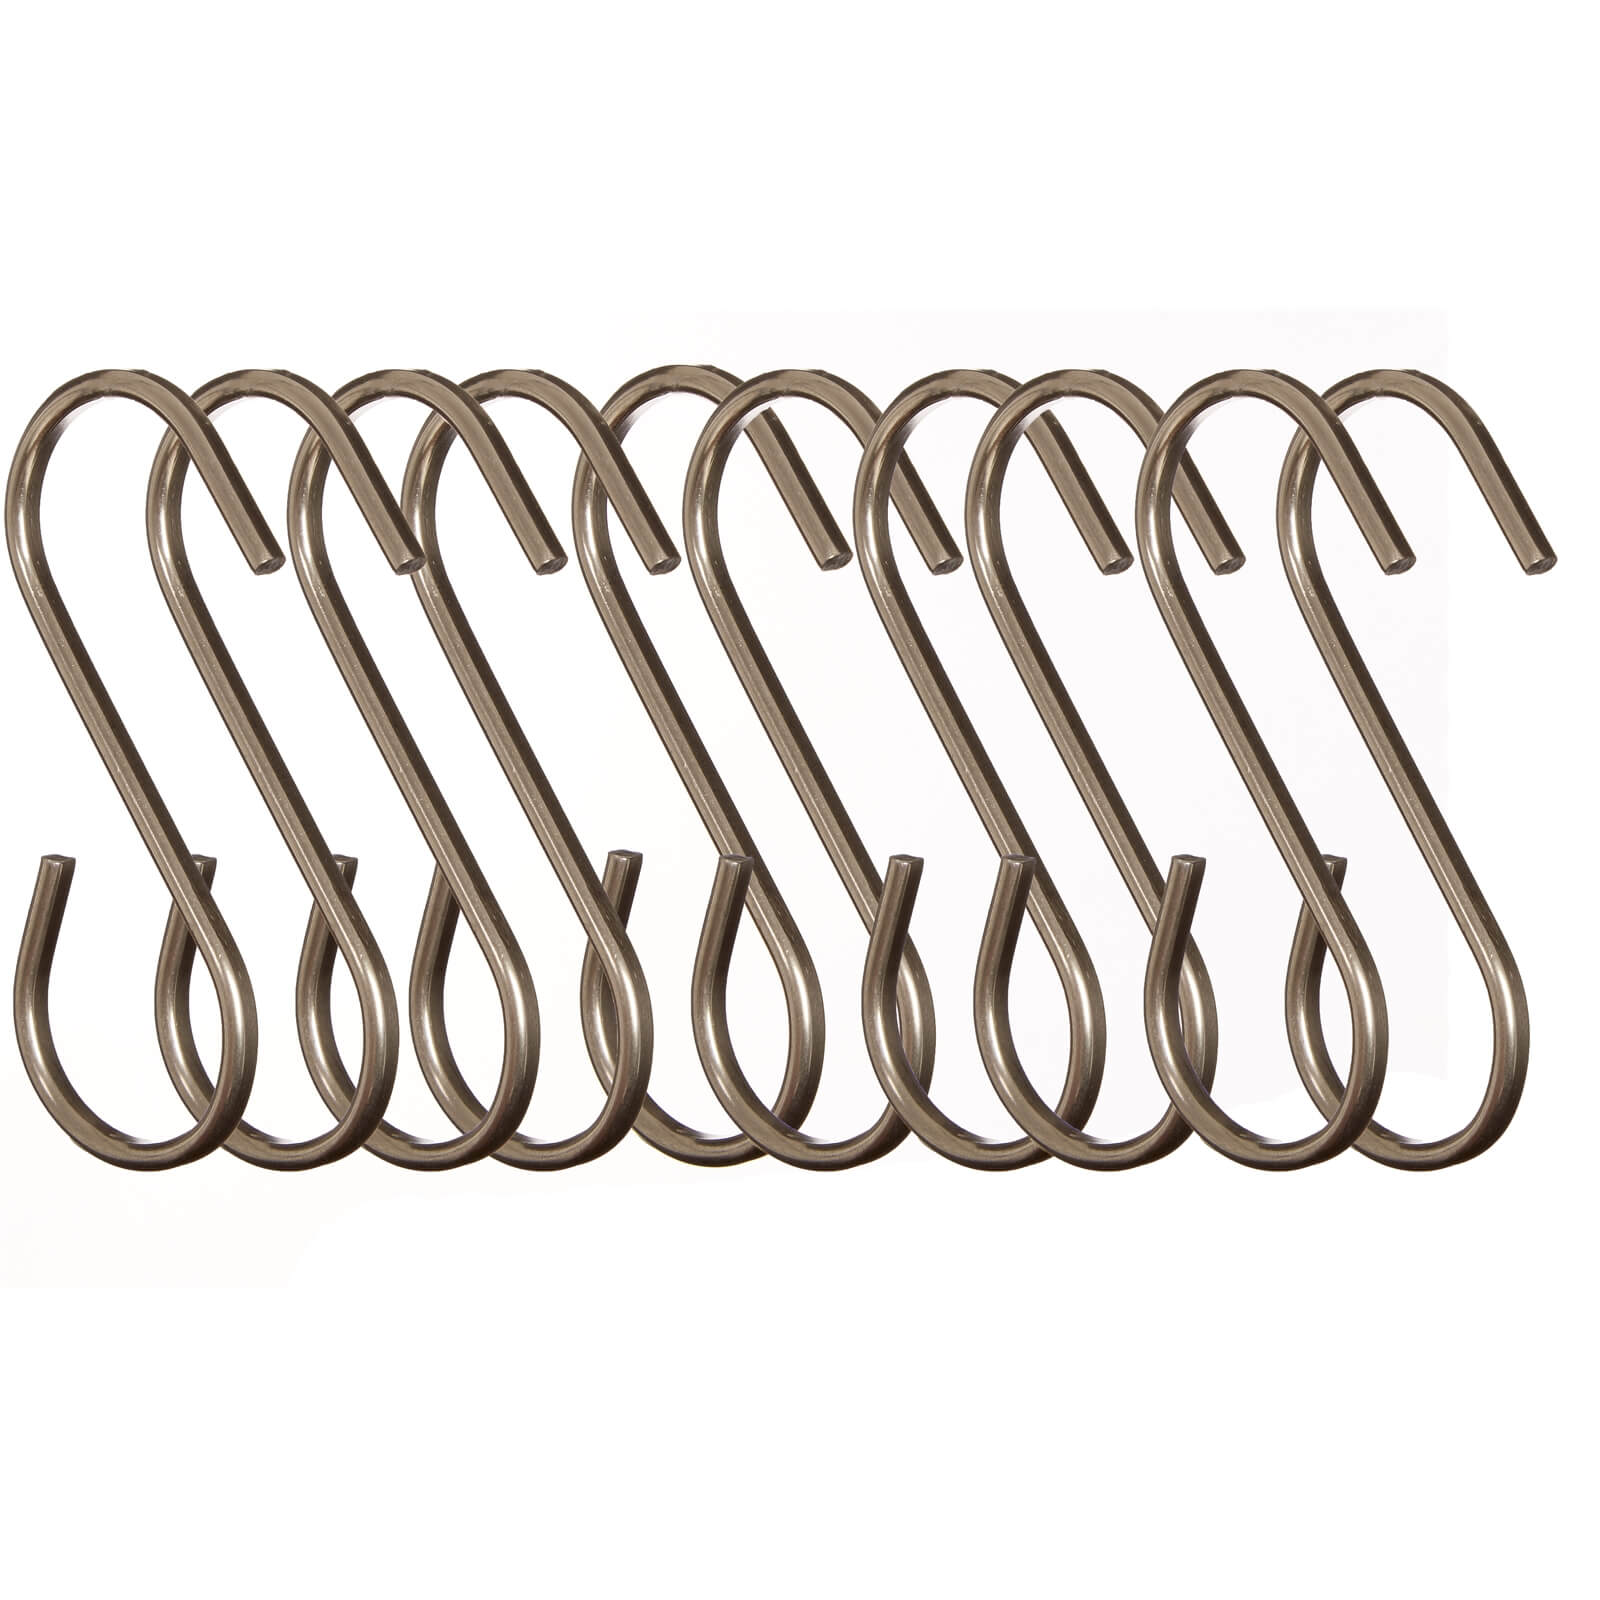 Sorello Brushed Steel Hooks - Set of 10